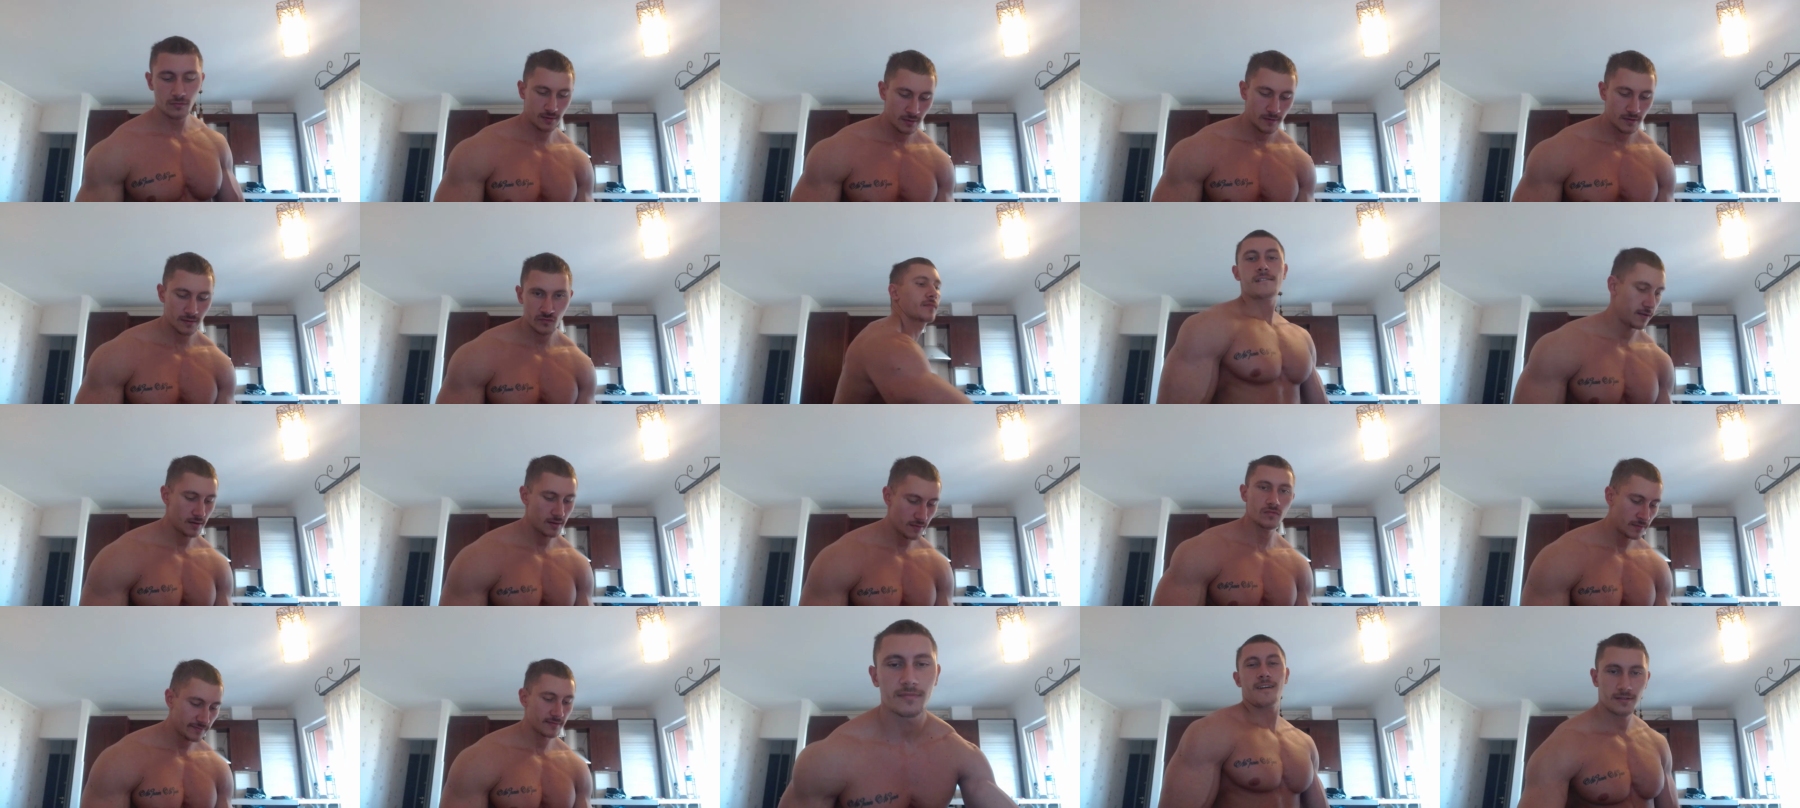 Angelofit  24-10-2021 Male Webcam